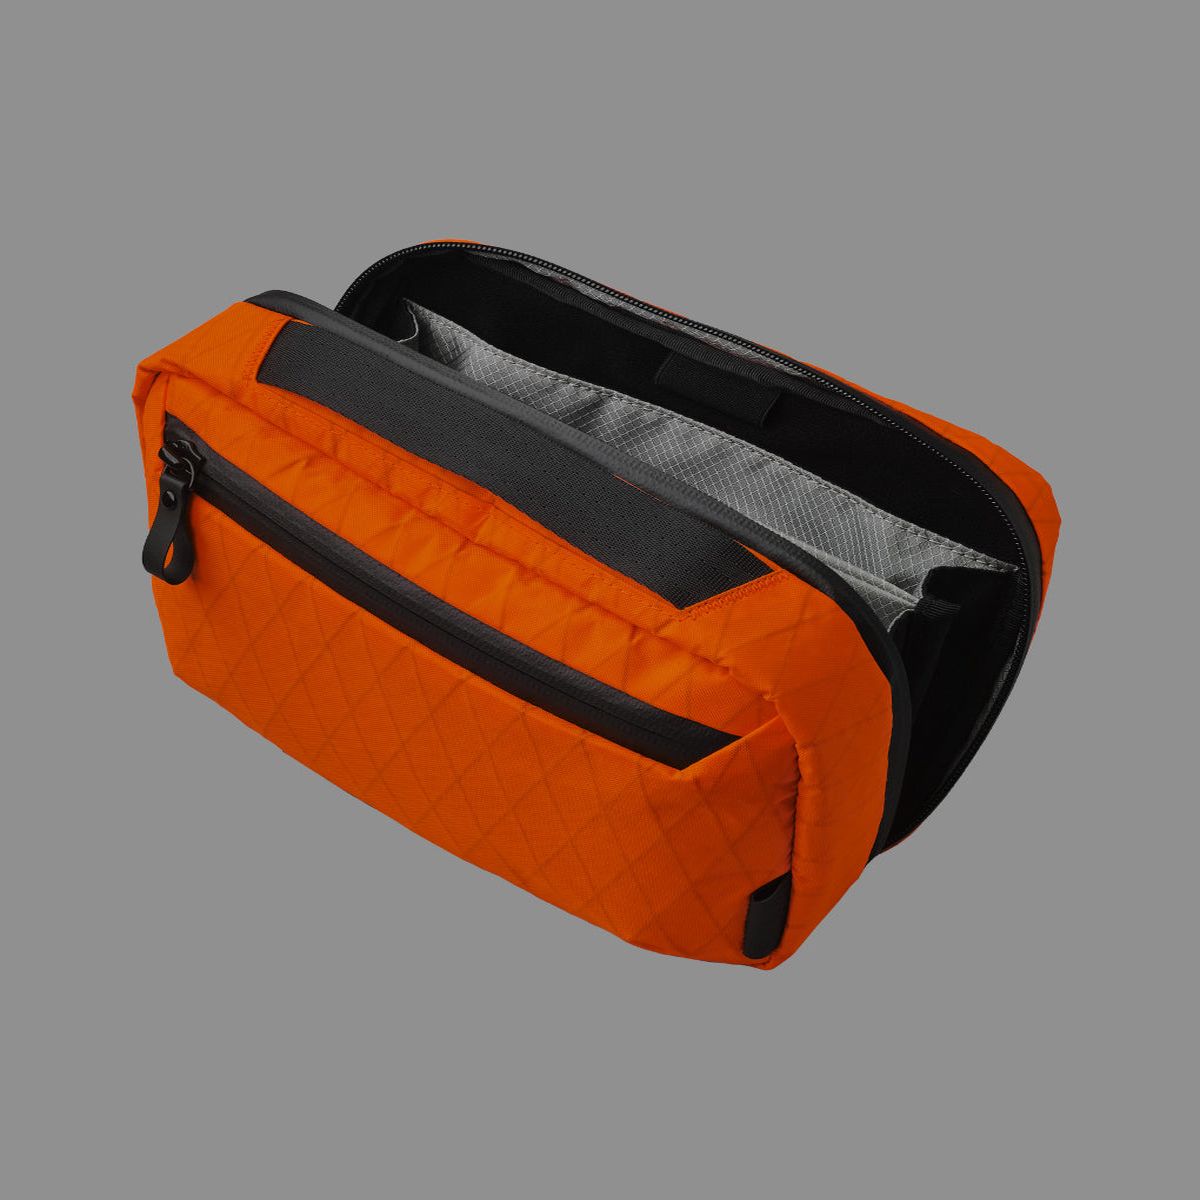 Alpaka Elements Tech Case Max - Hot Orange X-PAC VX25